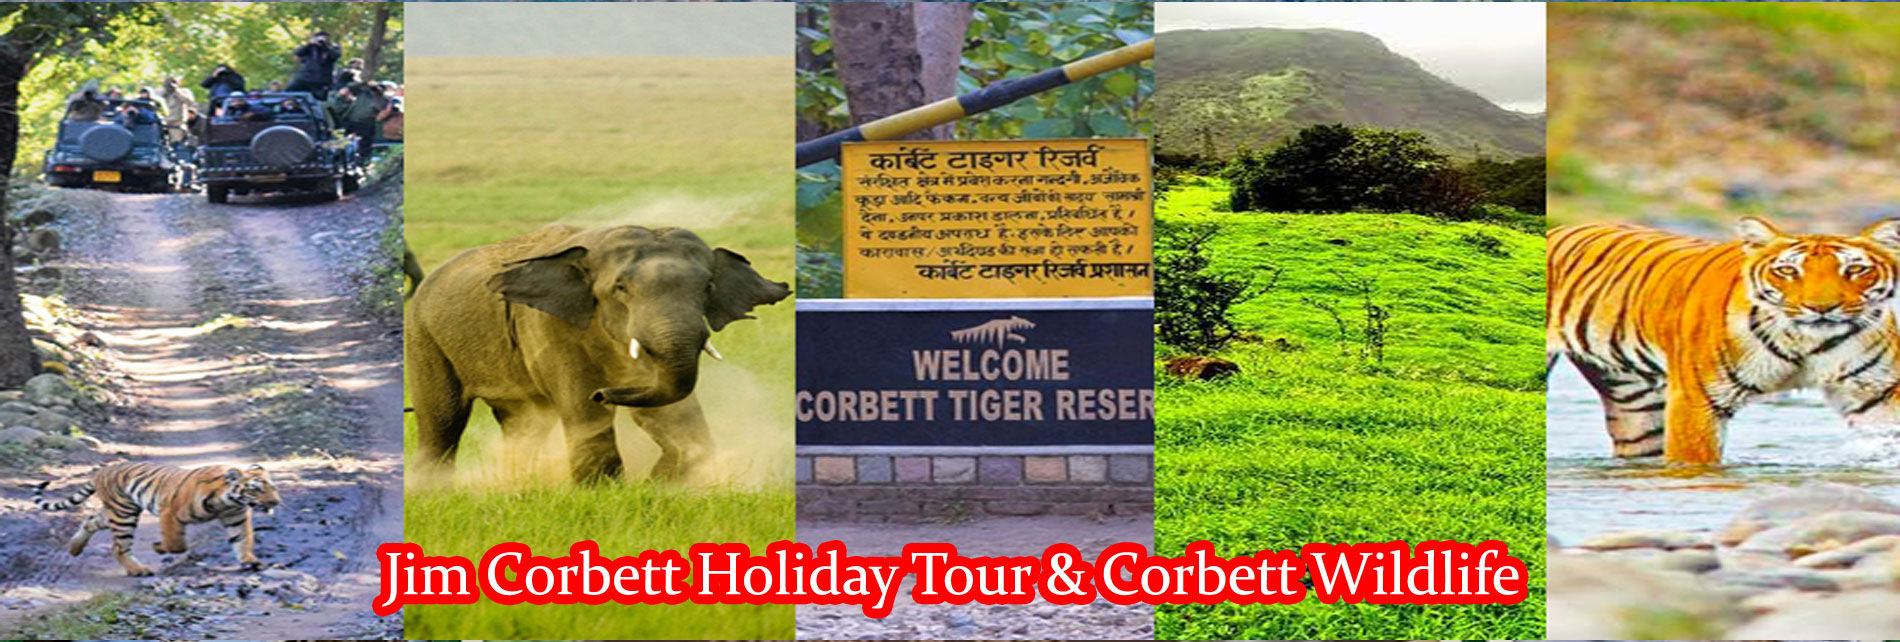 Jim Corbett Holiday Tour & Corbett Wildlife